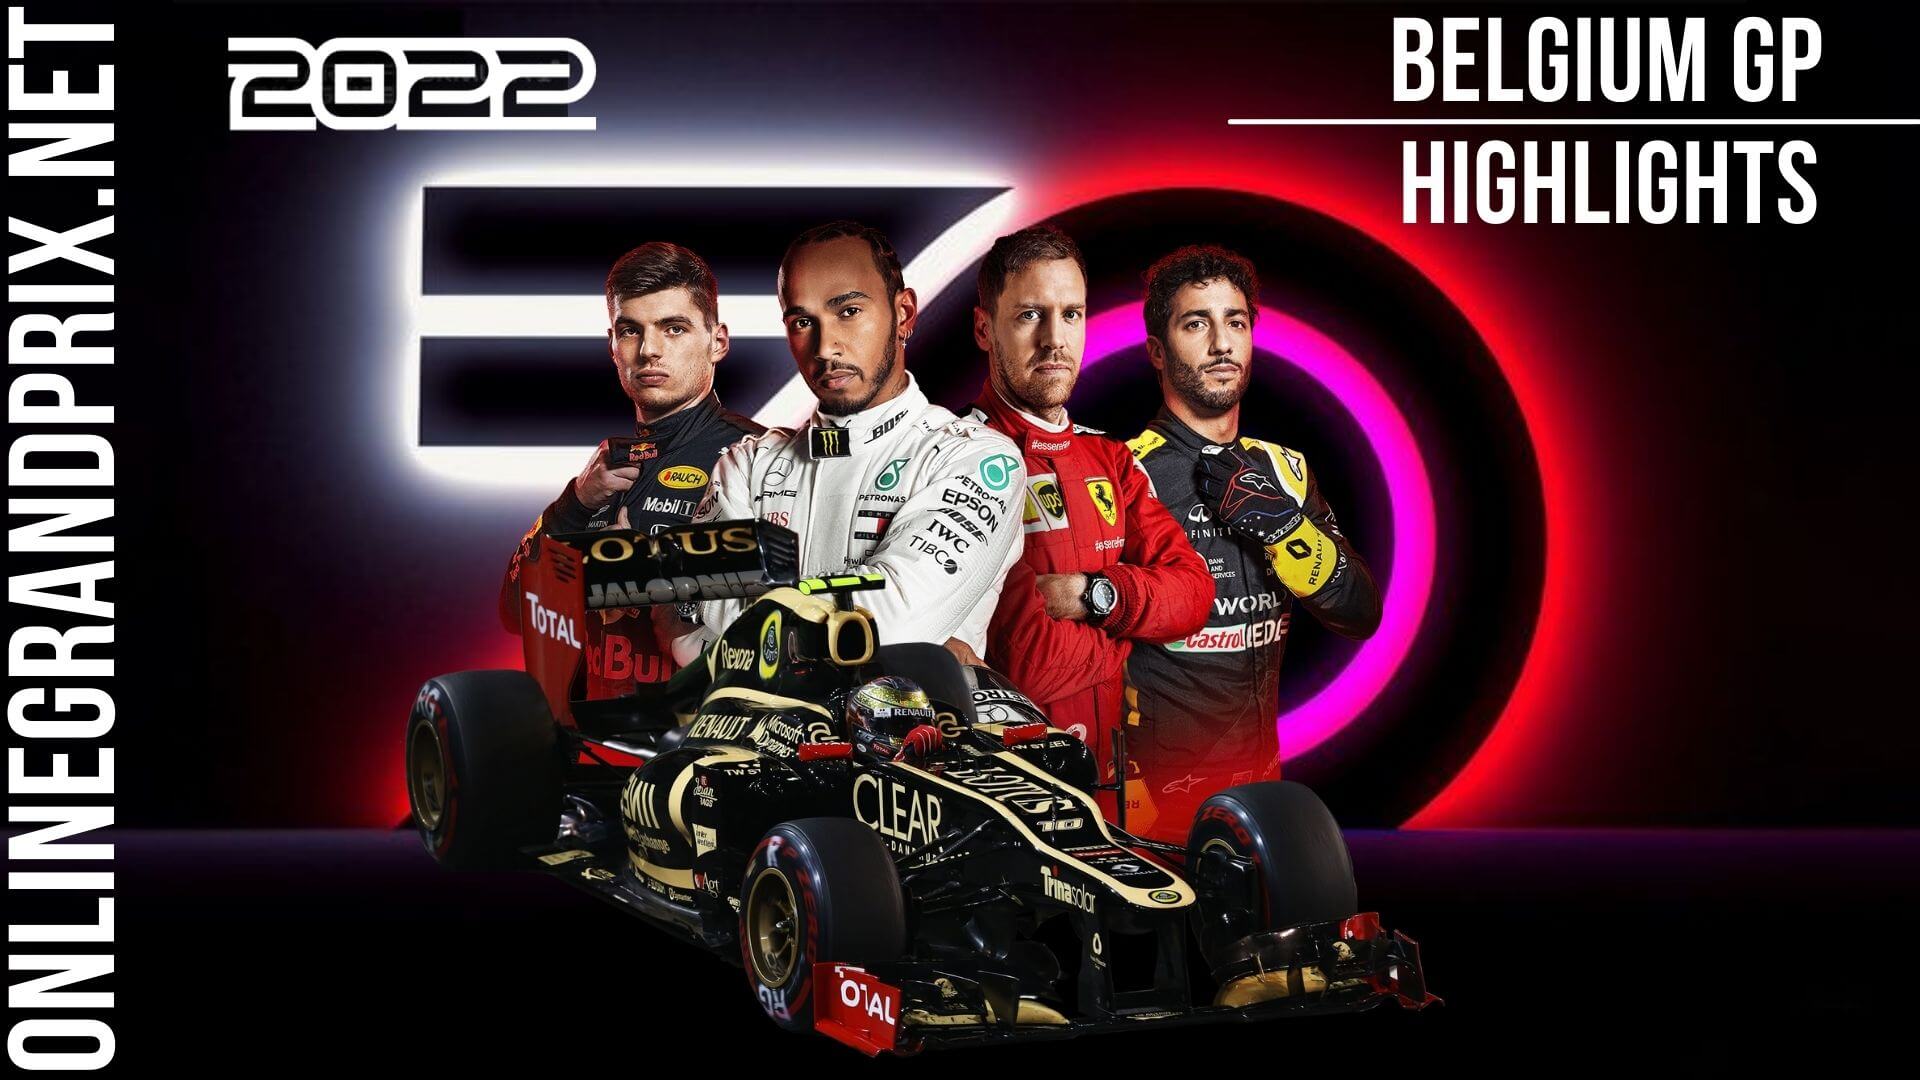 Belgium GP F1 Highlights 2022